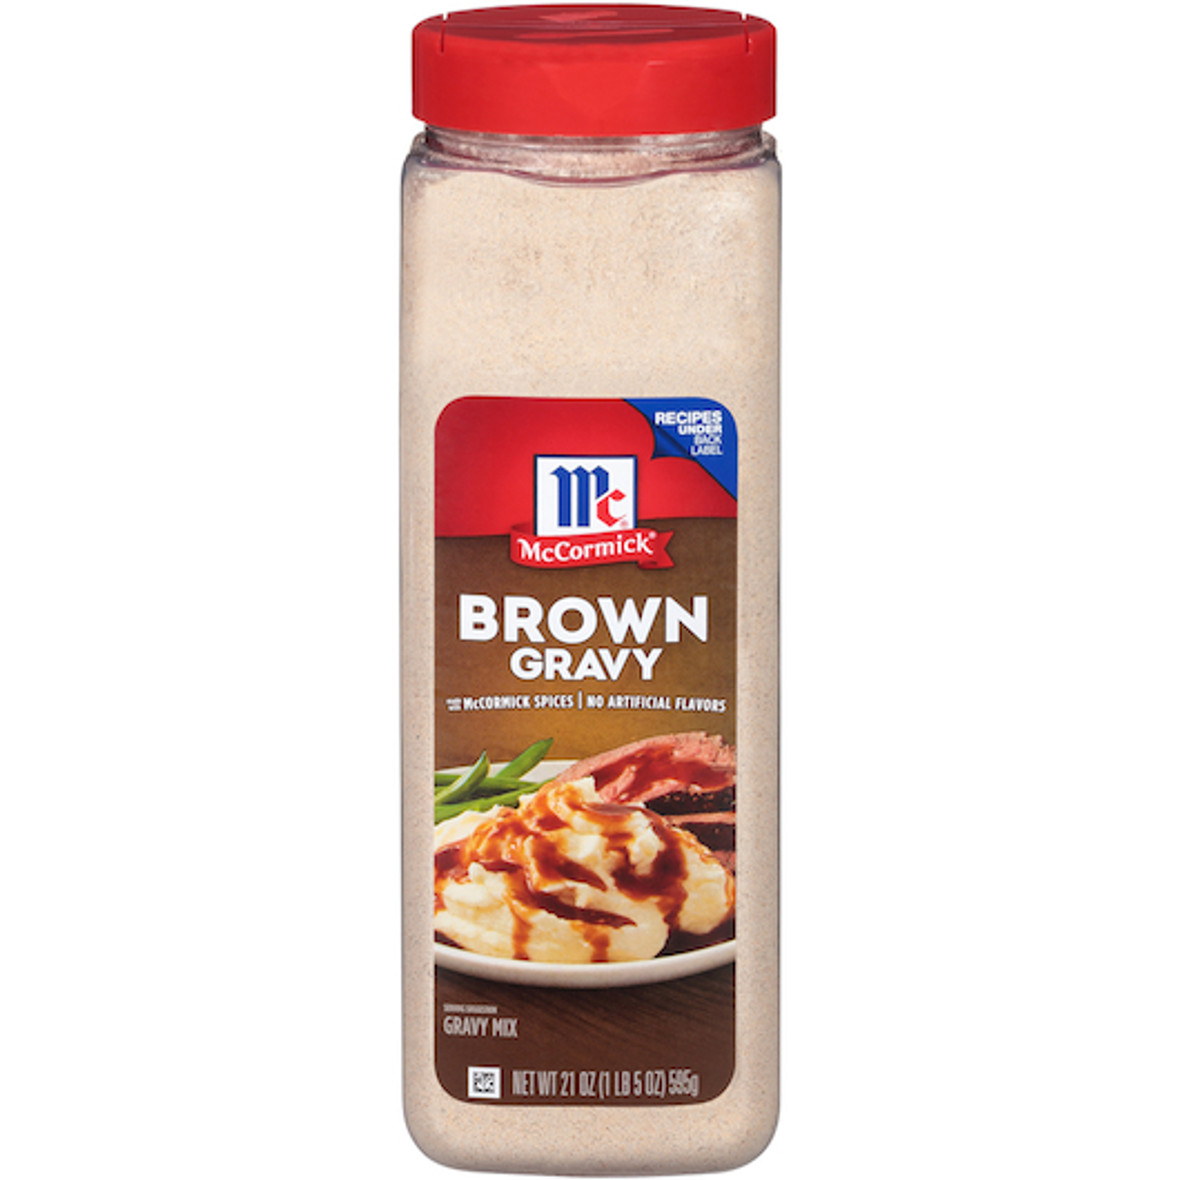 Mccormick Brown Gravy, 21 Ounce, 12 Per Case